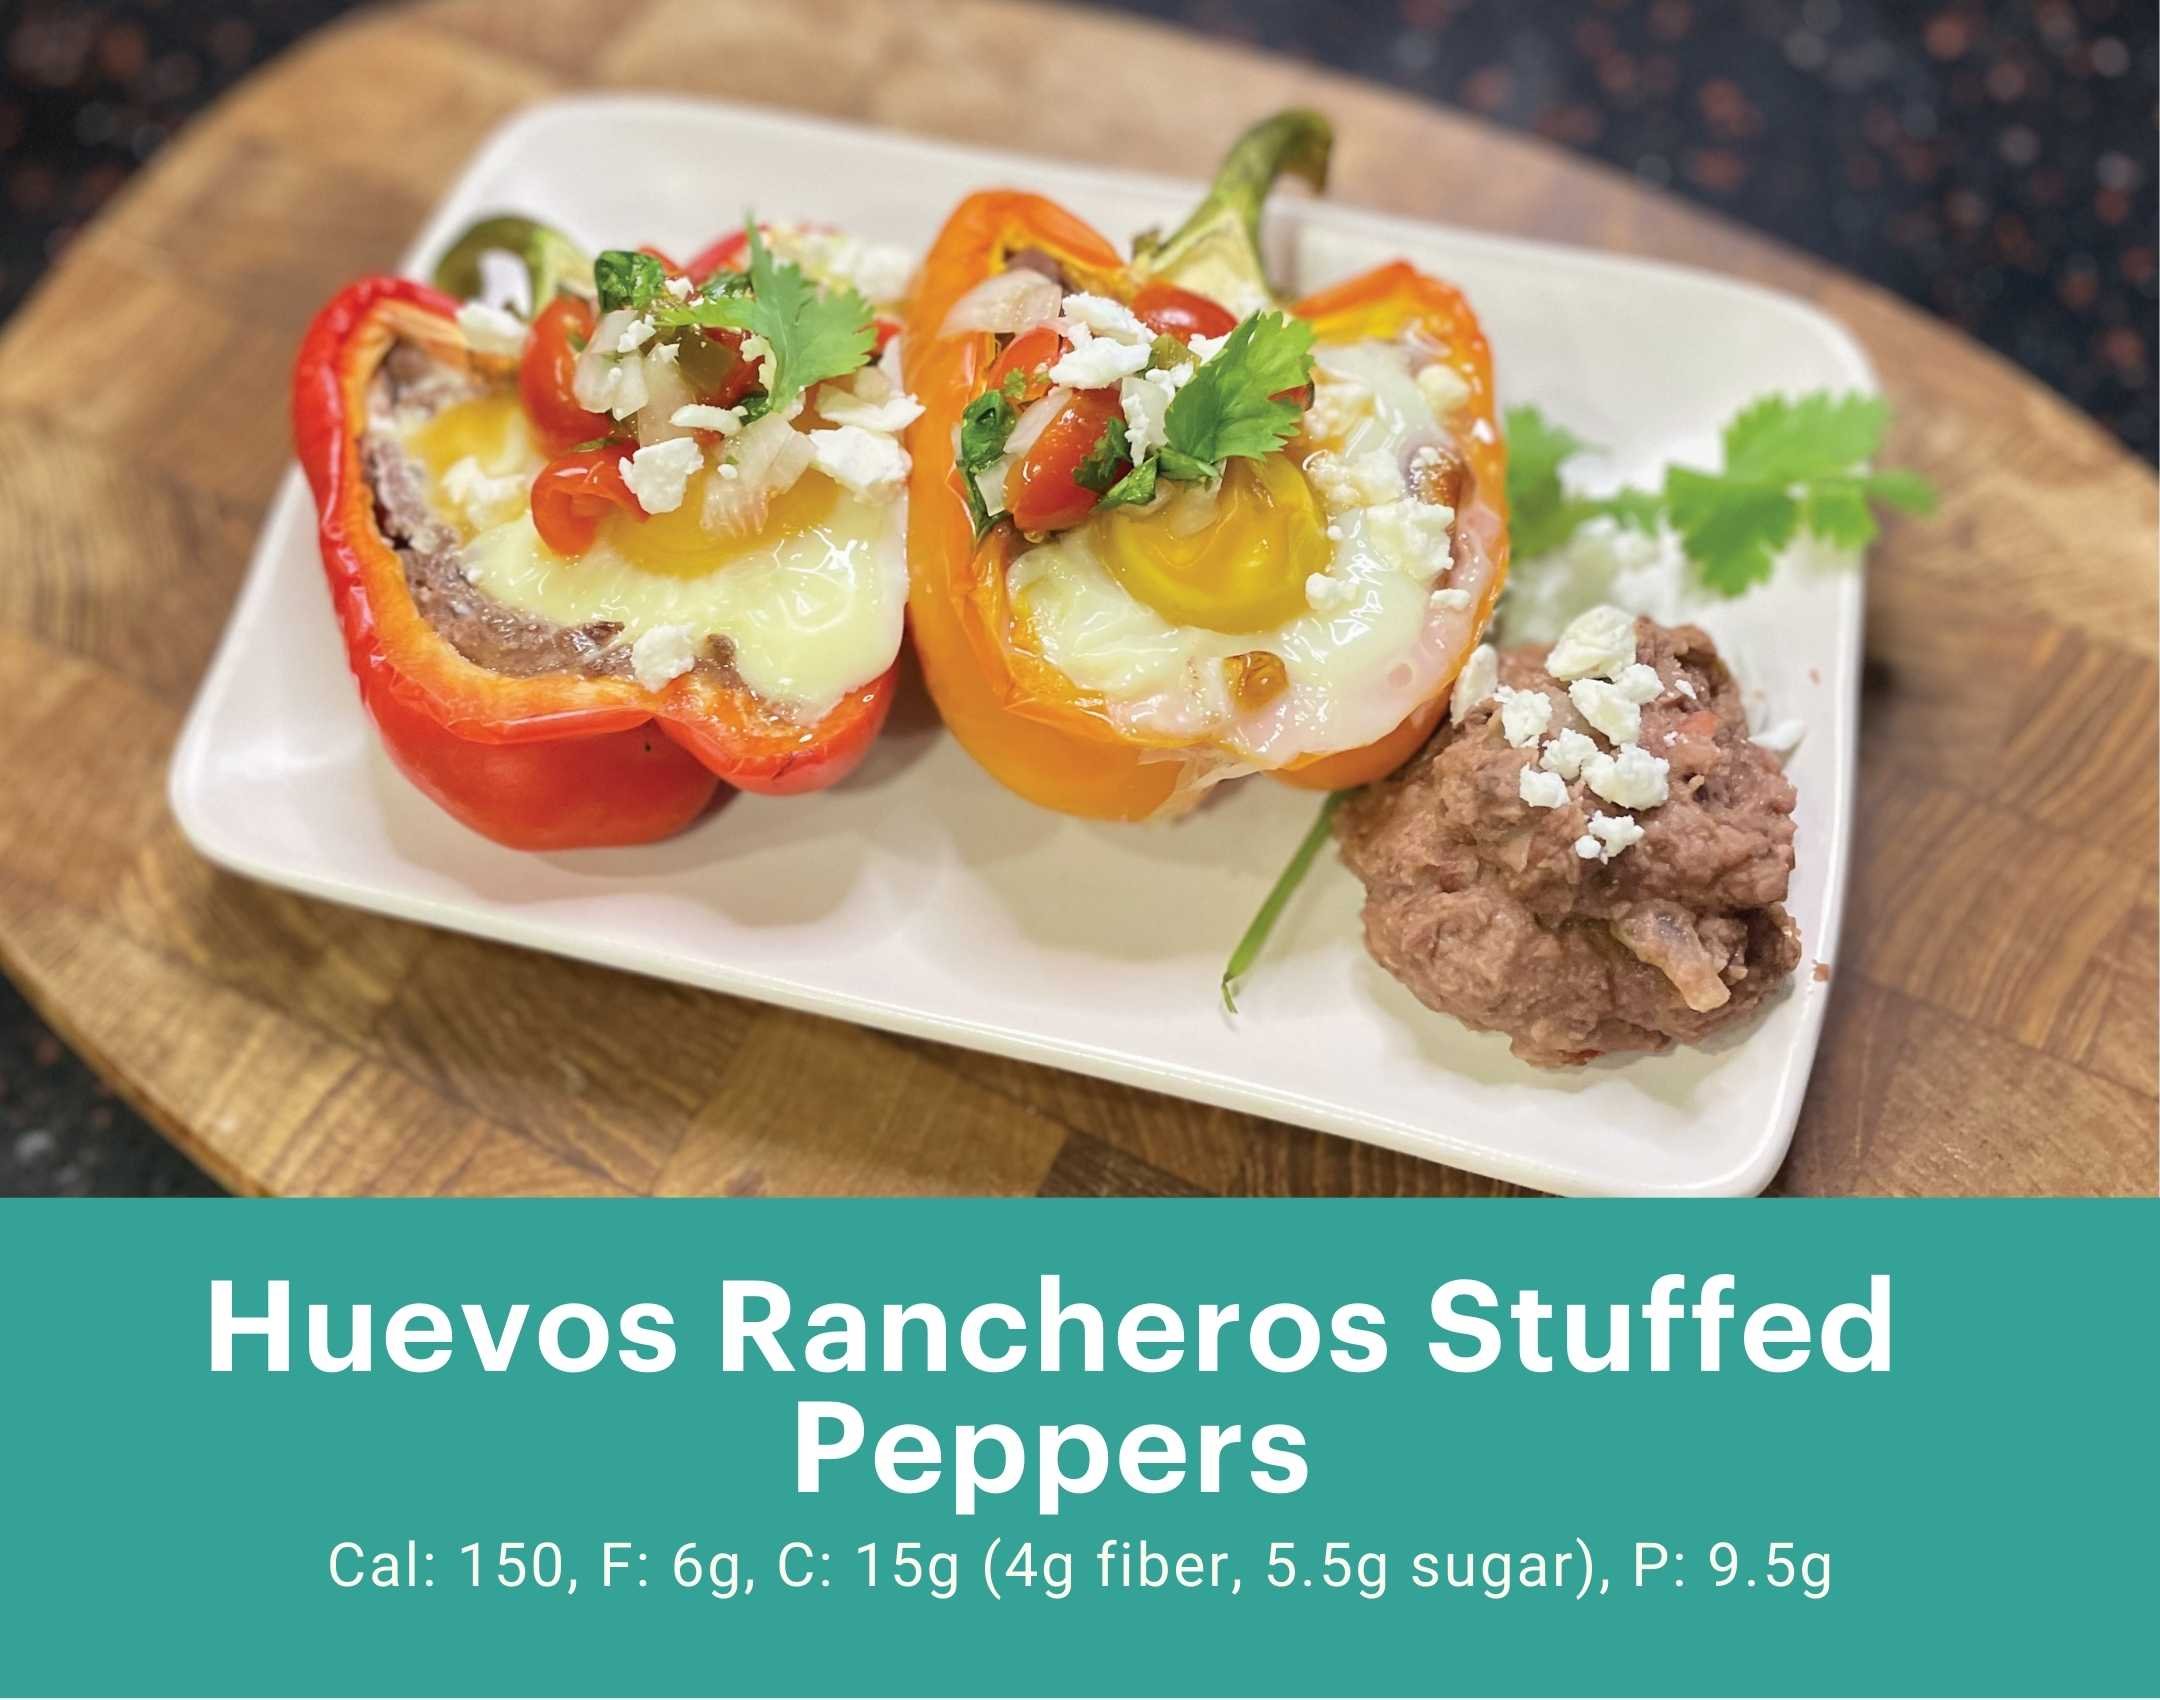 Huevos Rancheros Stuffed Peppers.jpg